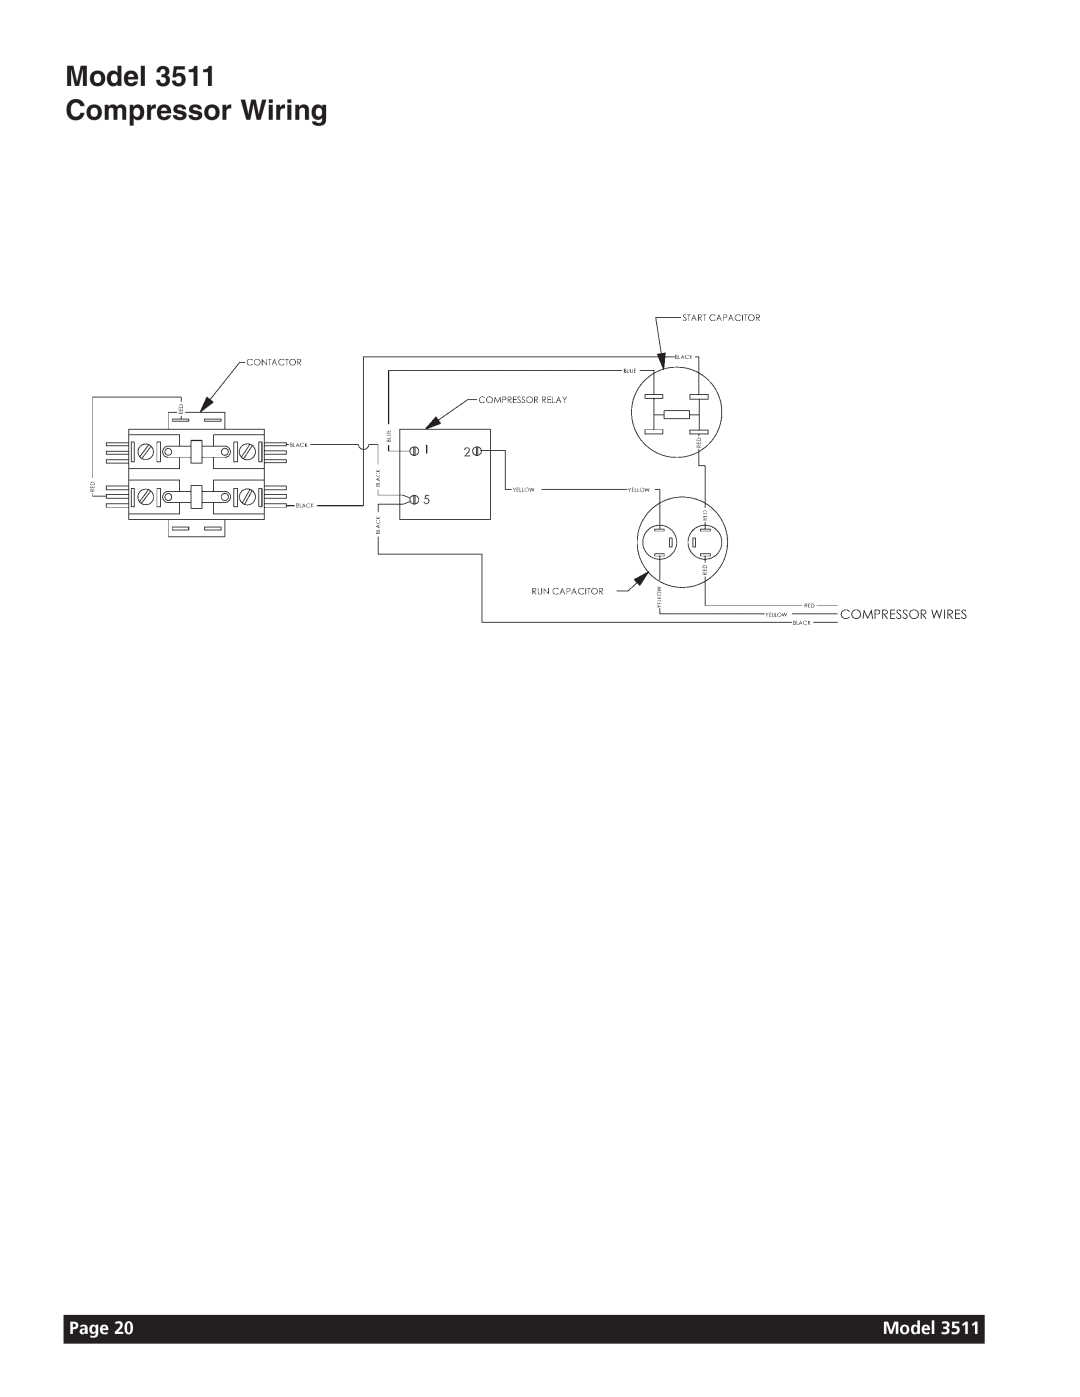 Grindmaster manual Model 3511 Compressor Wiring, Page 